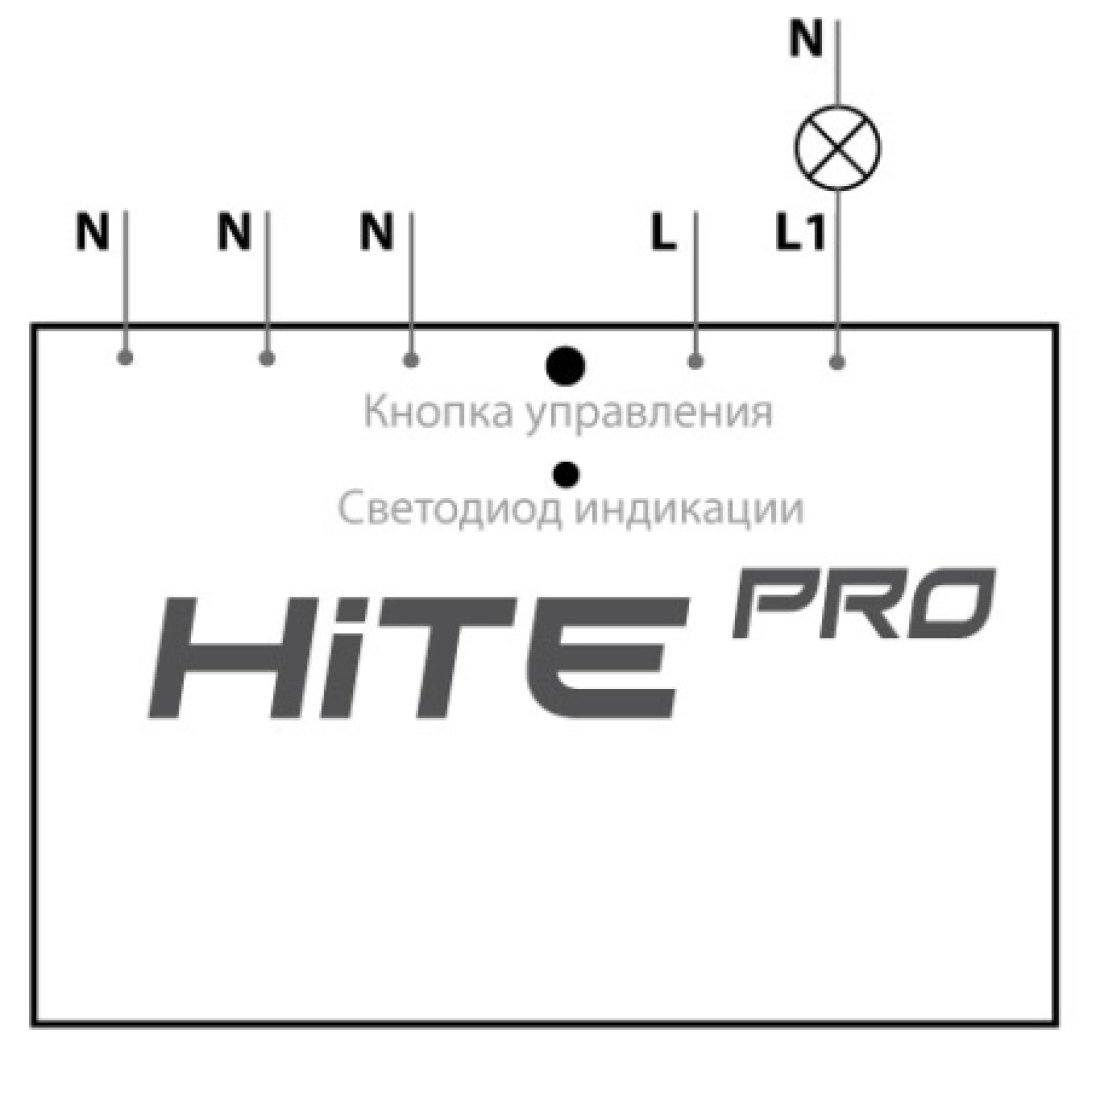 Блок радиореле HiTE PRO Relay-1 одноканальное